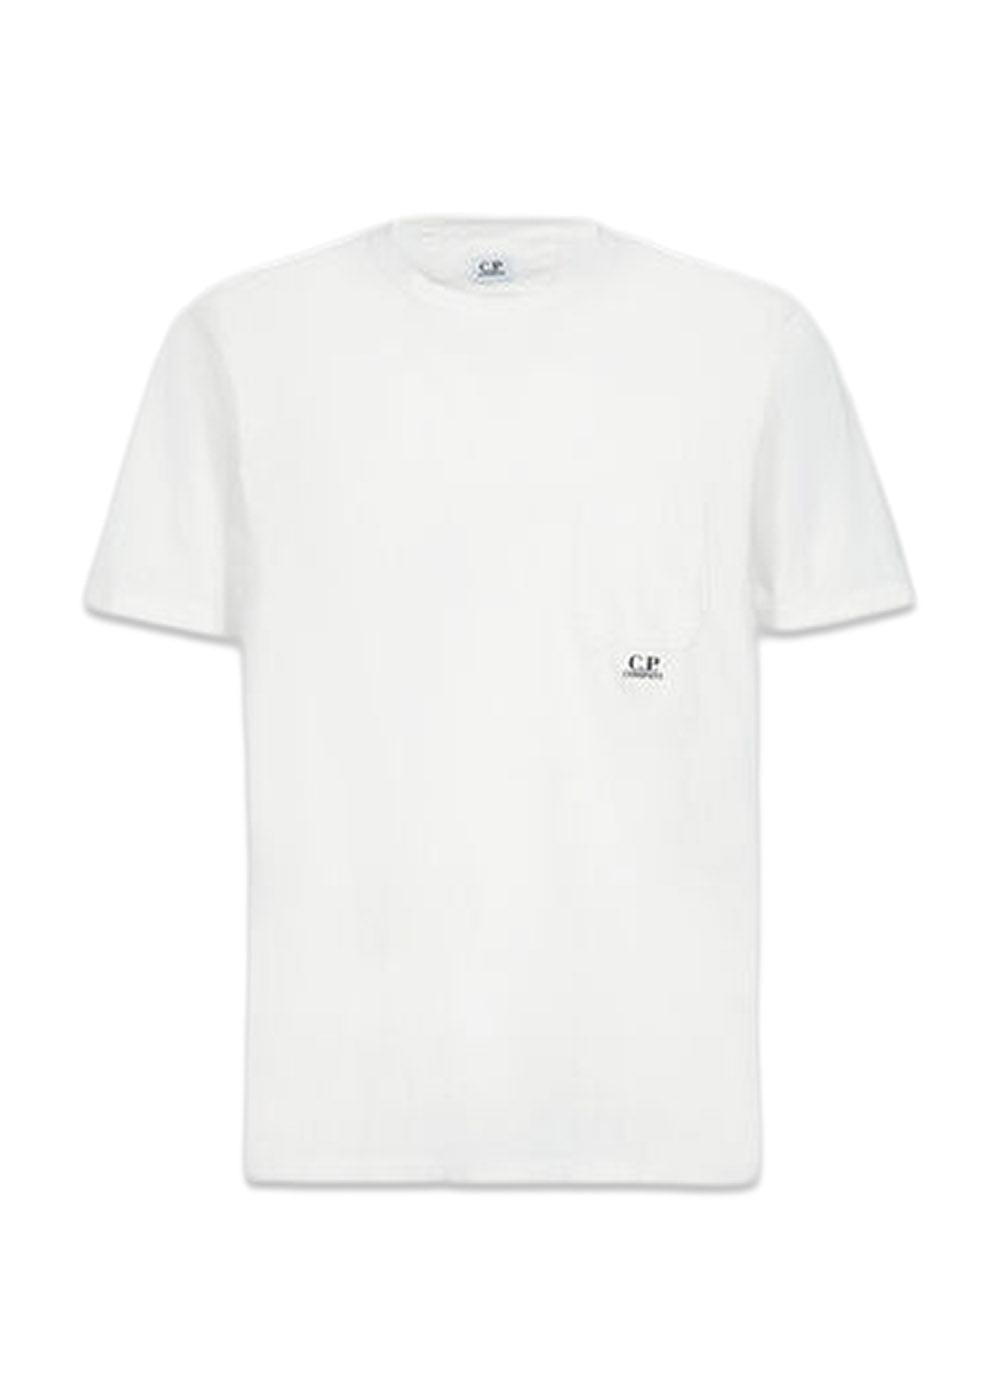 C.P. Companys Pocket Tee - Gauze White. Køb t-shirts her.